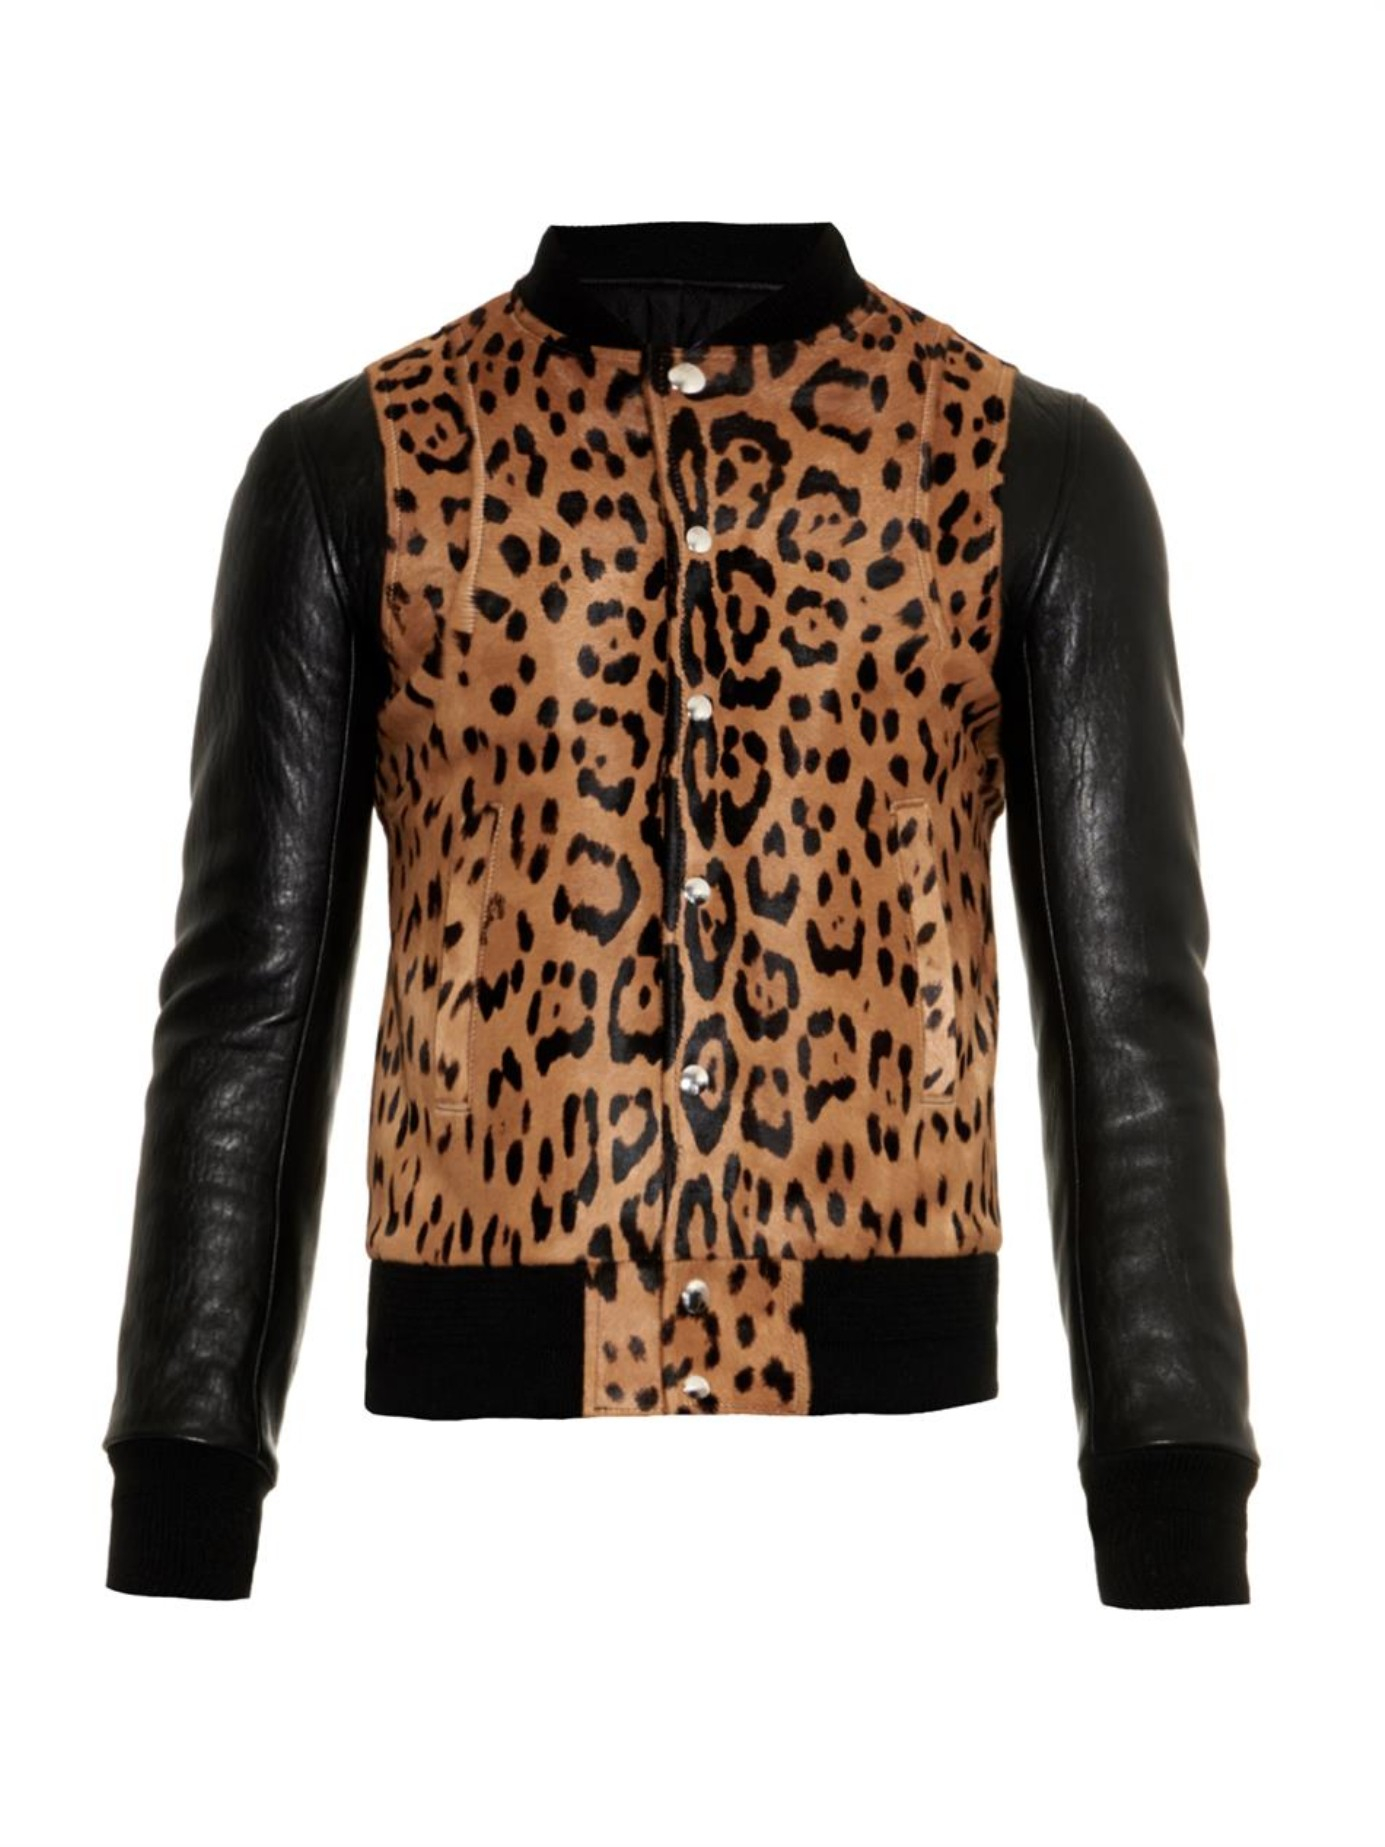 Balmain Leather Leopard-print Bomber Jacket for Men - Lyst